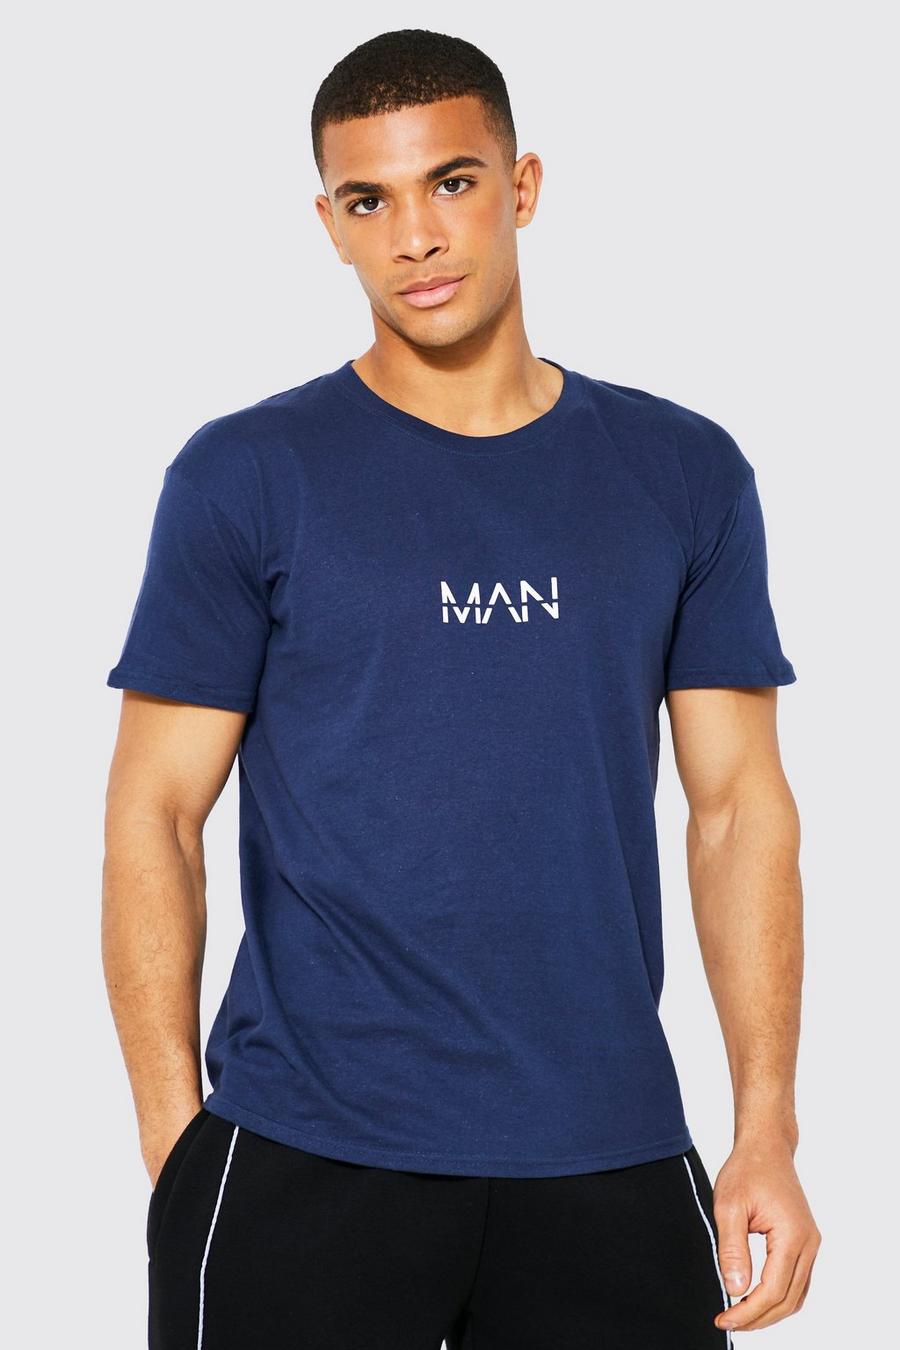 T-shirt - MAN, Navy